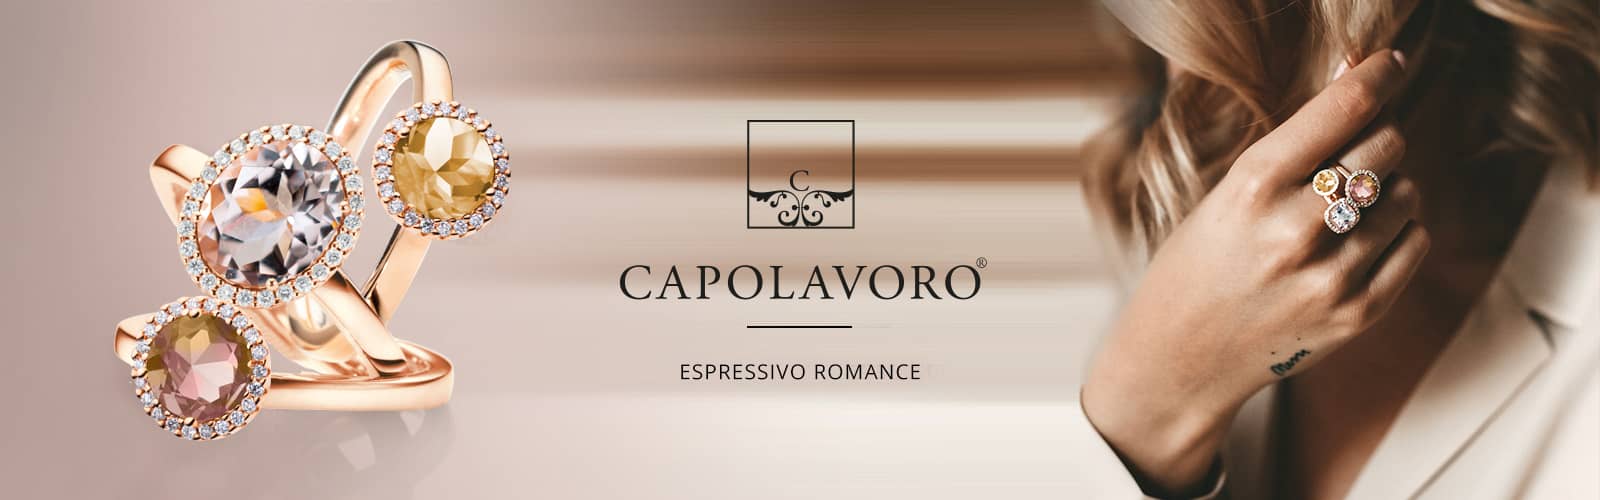 Banner-Capolavoro